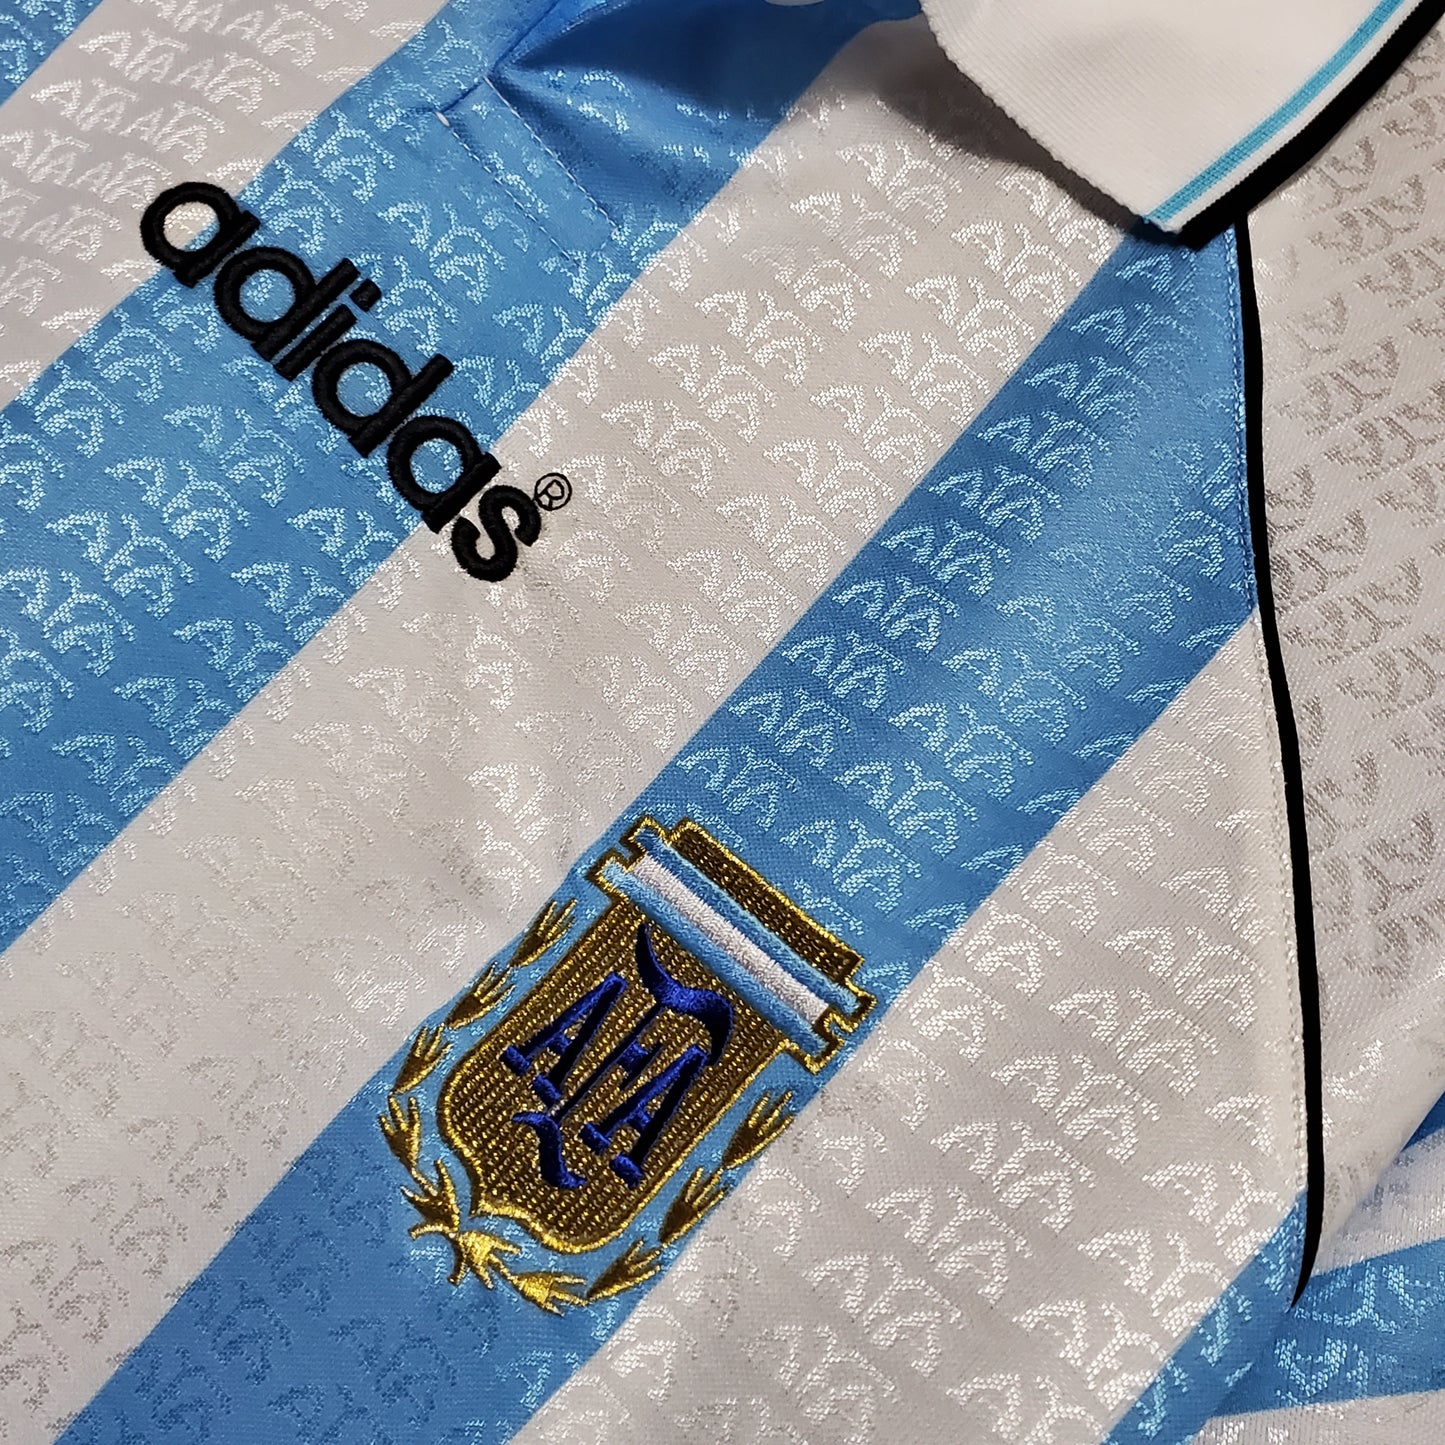 Argentina 1994 Home Shirt